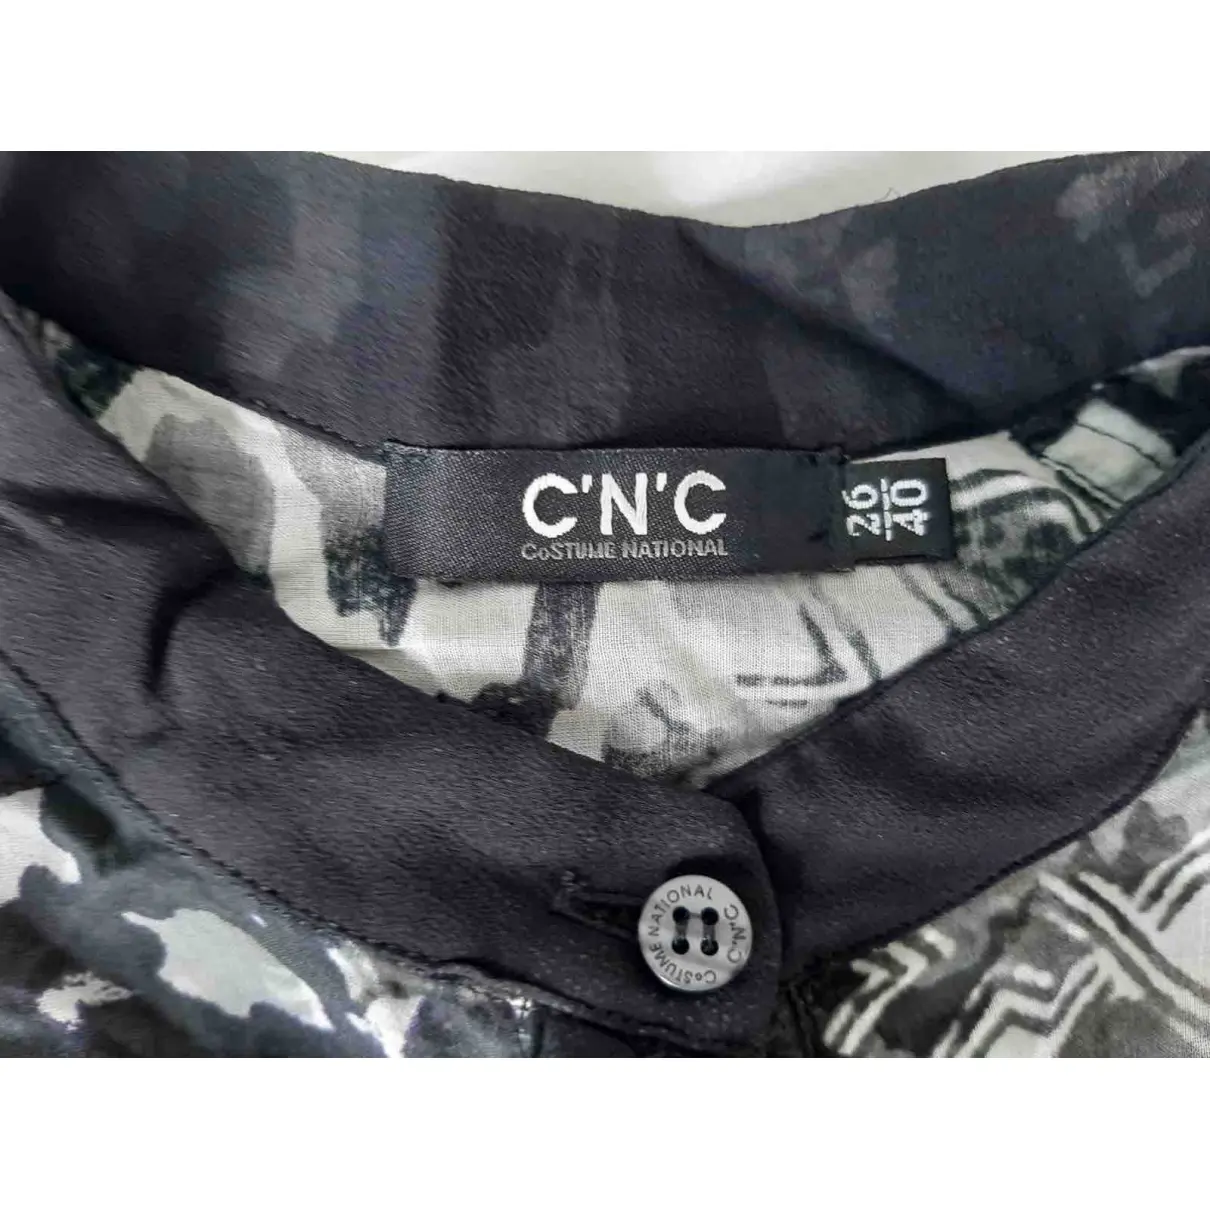 Buy CNC Silk shirt online